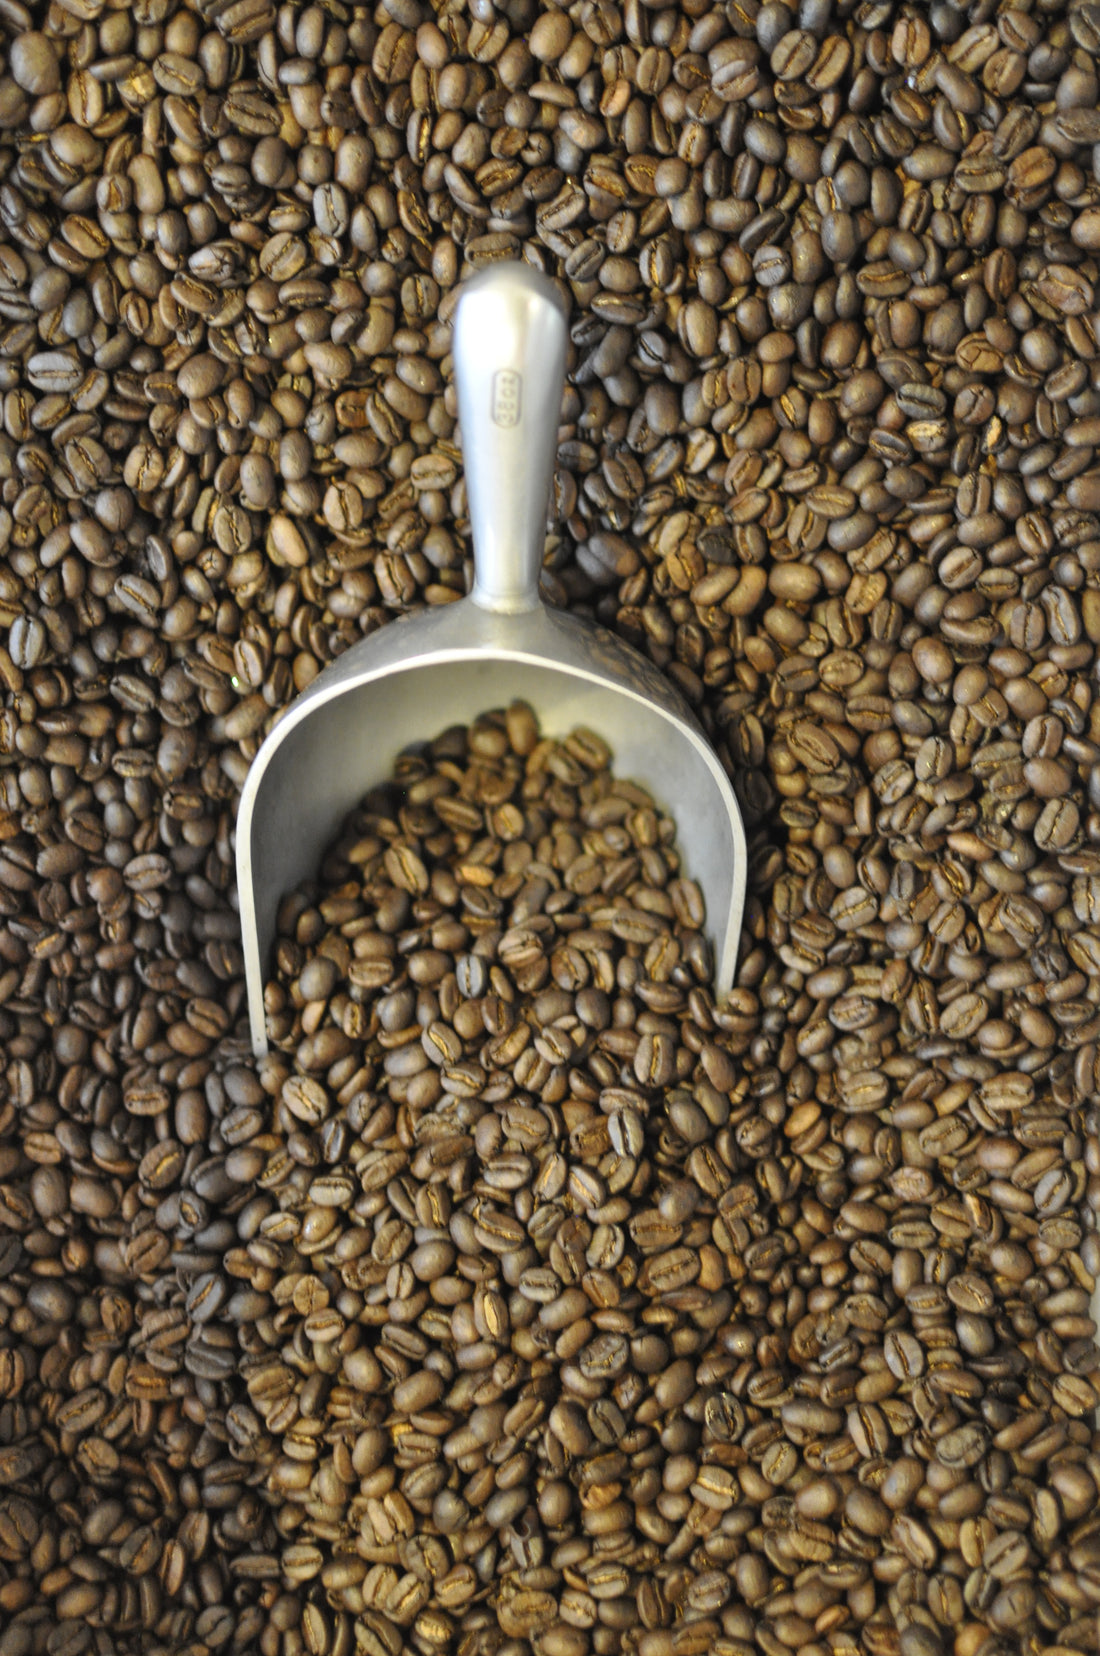 Organic vs Conventional coffee